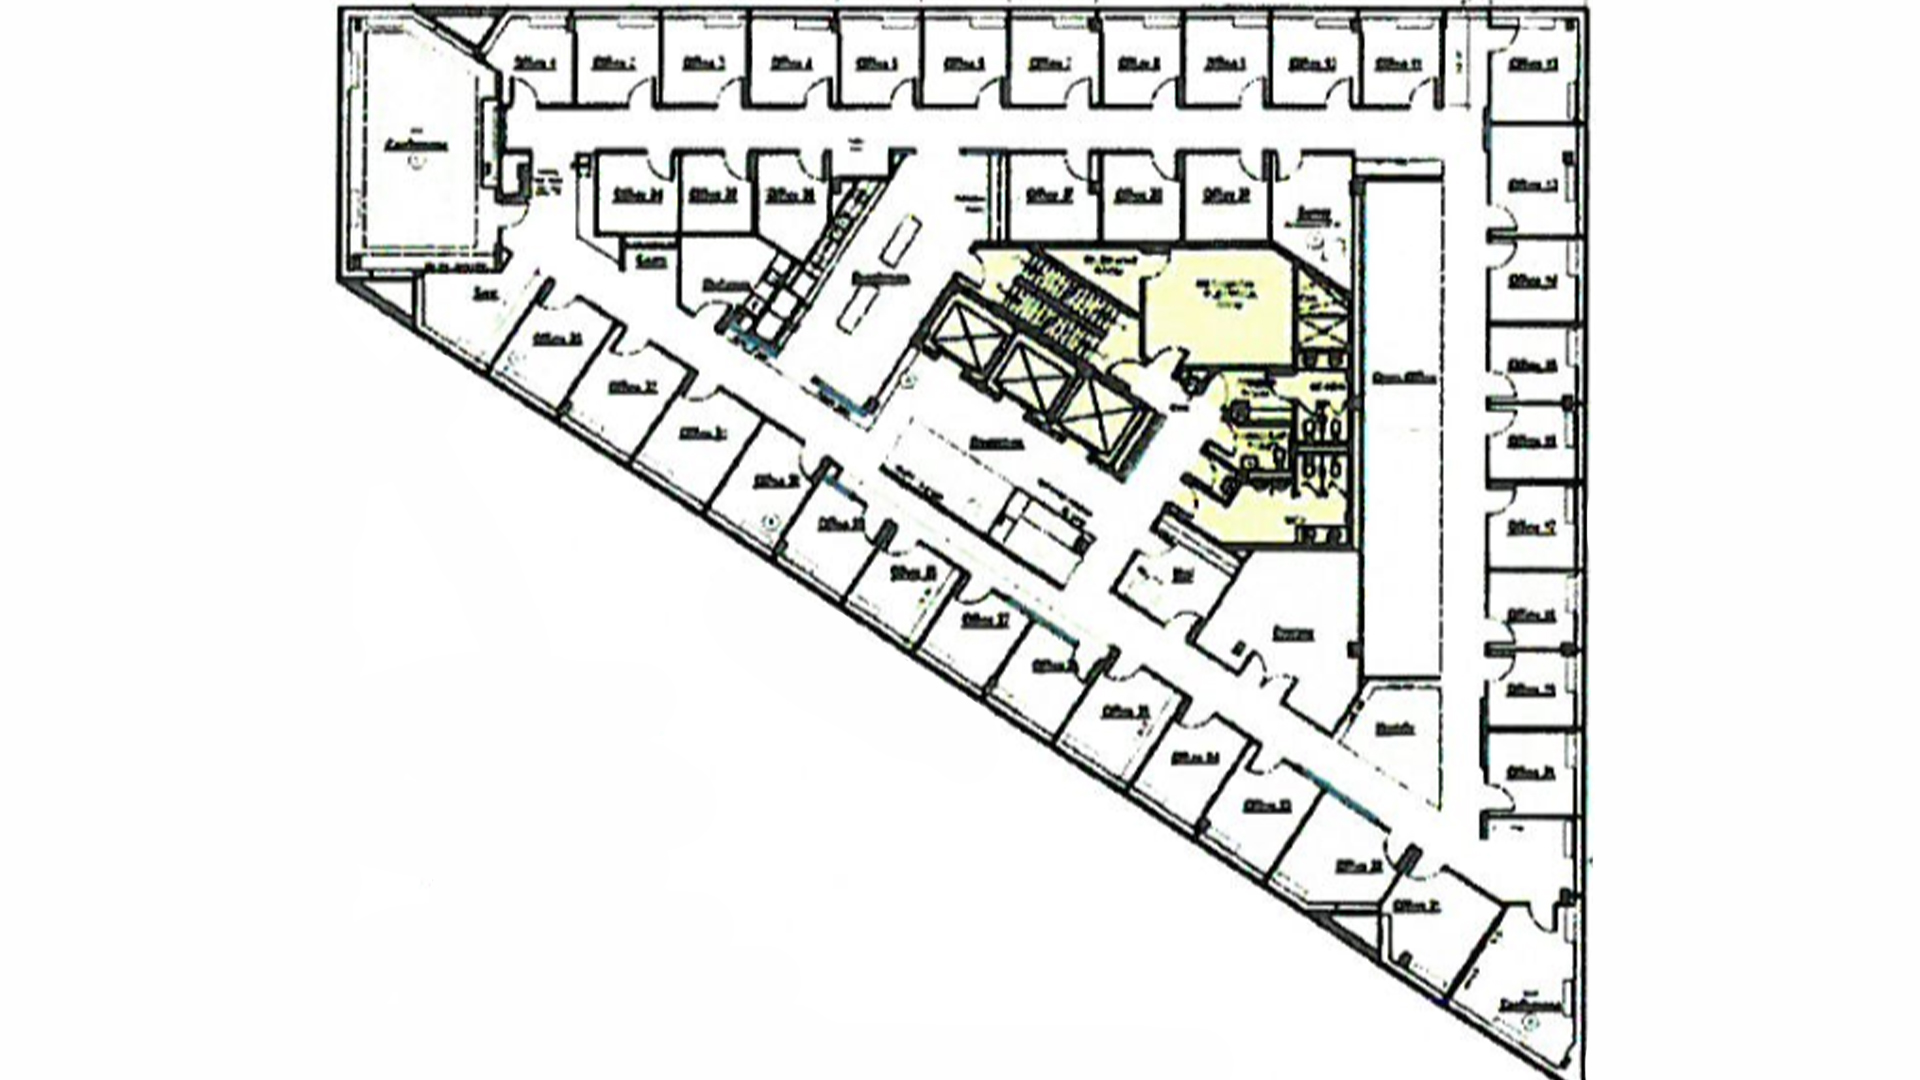 1199 N Fairfax floor plan